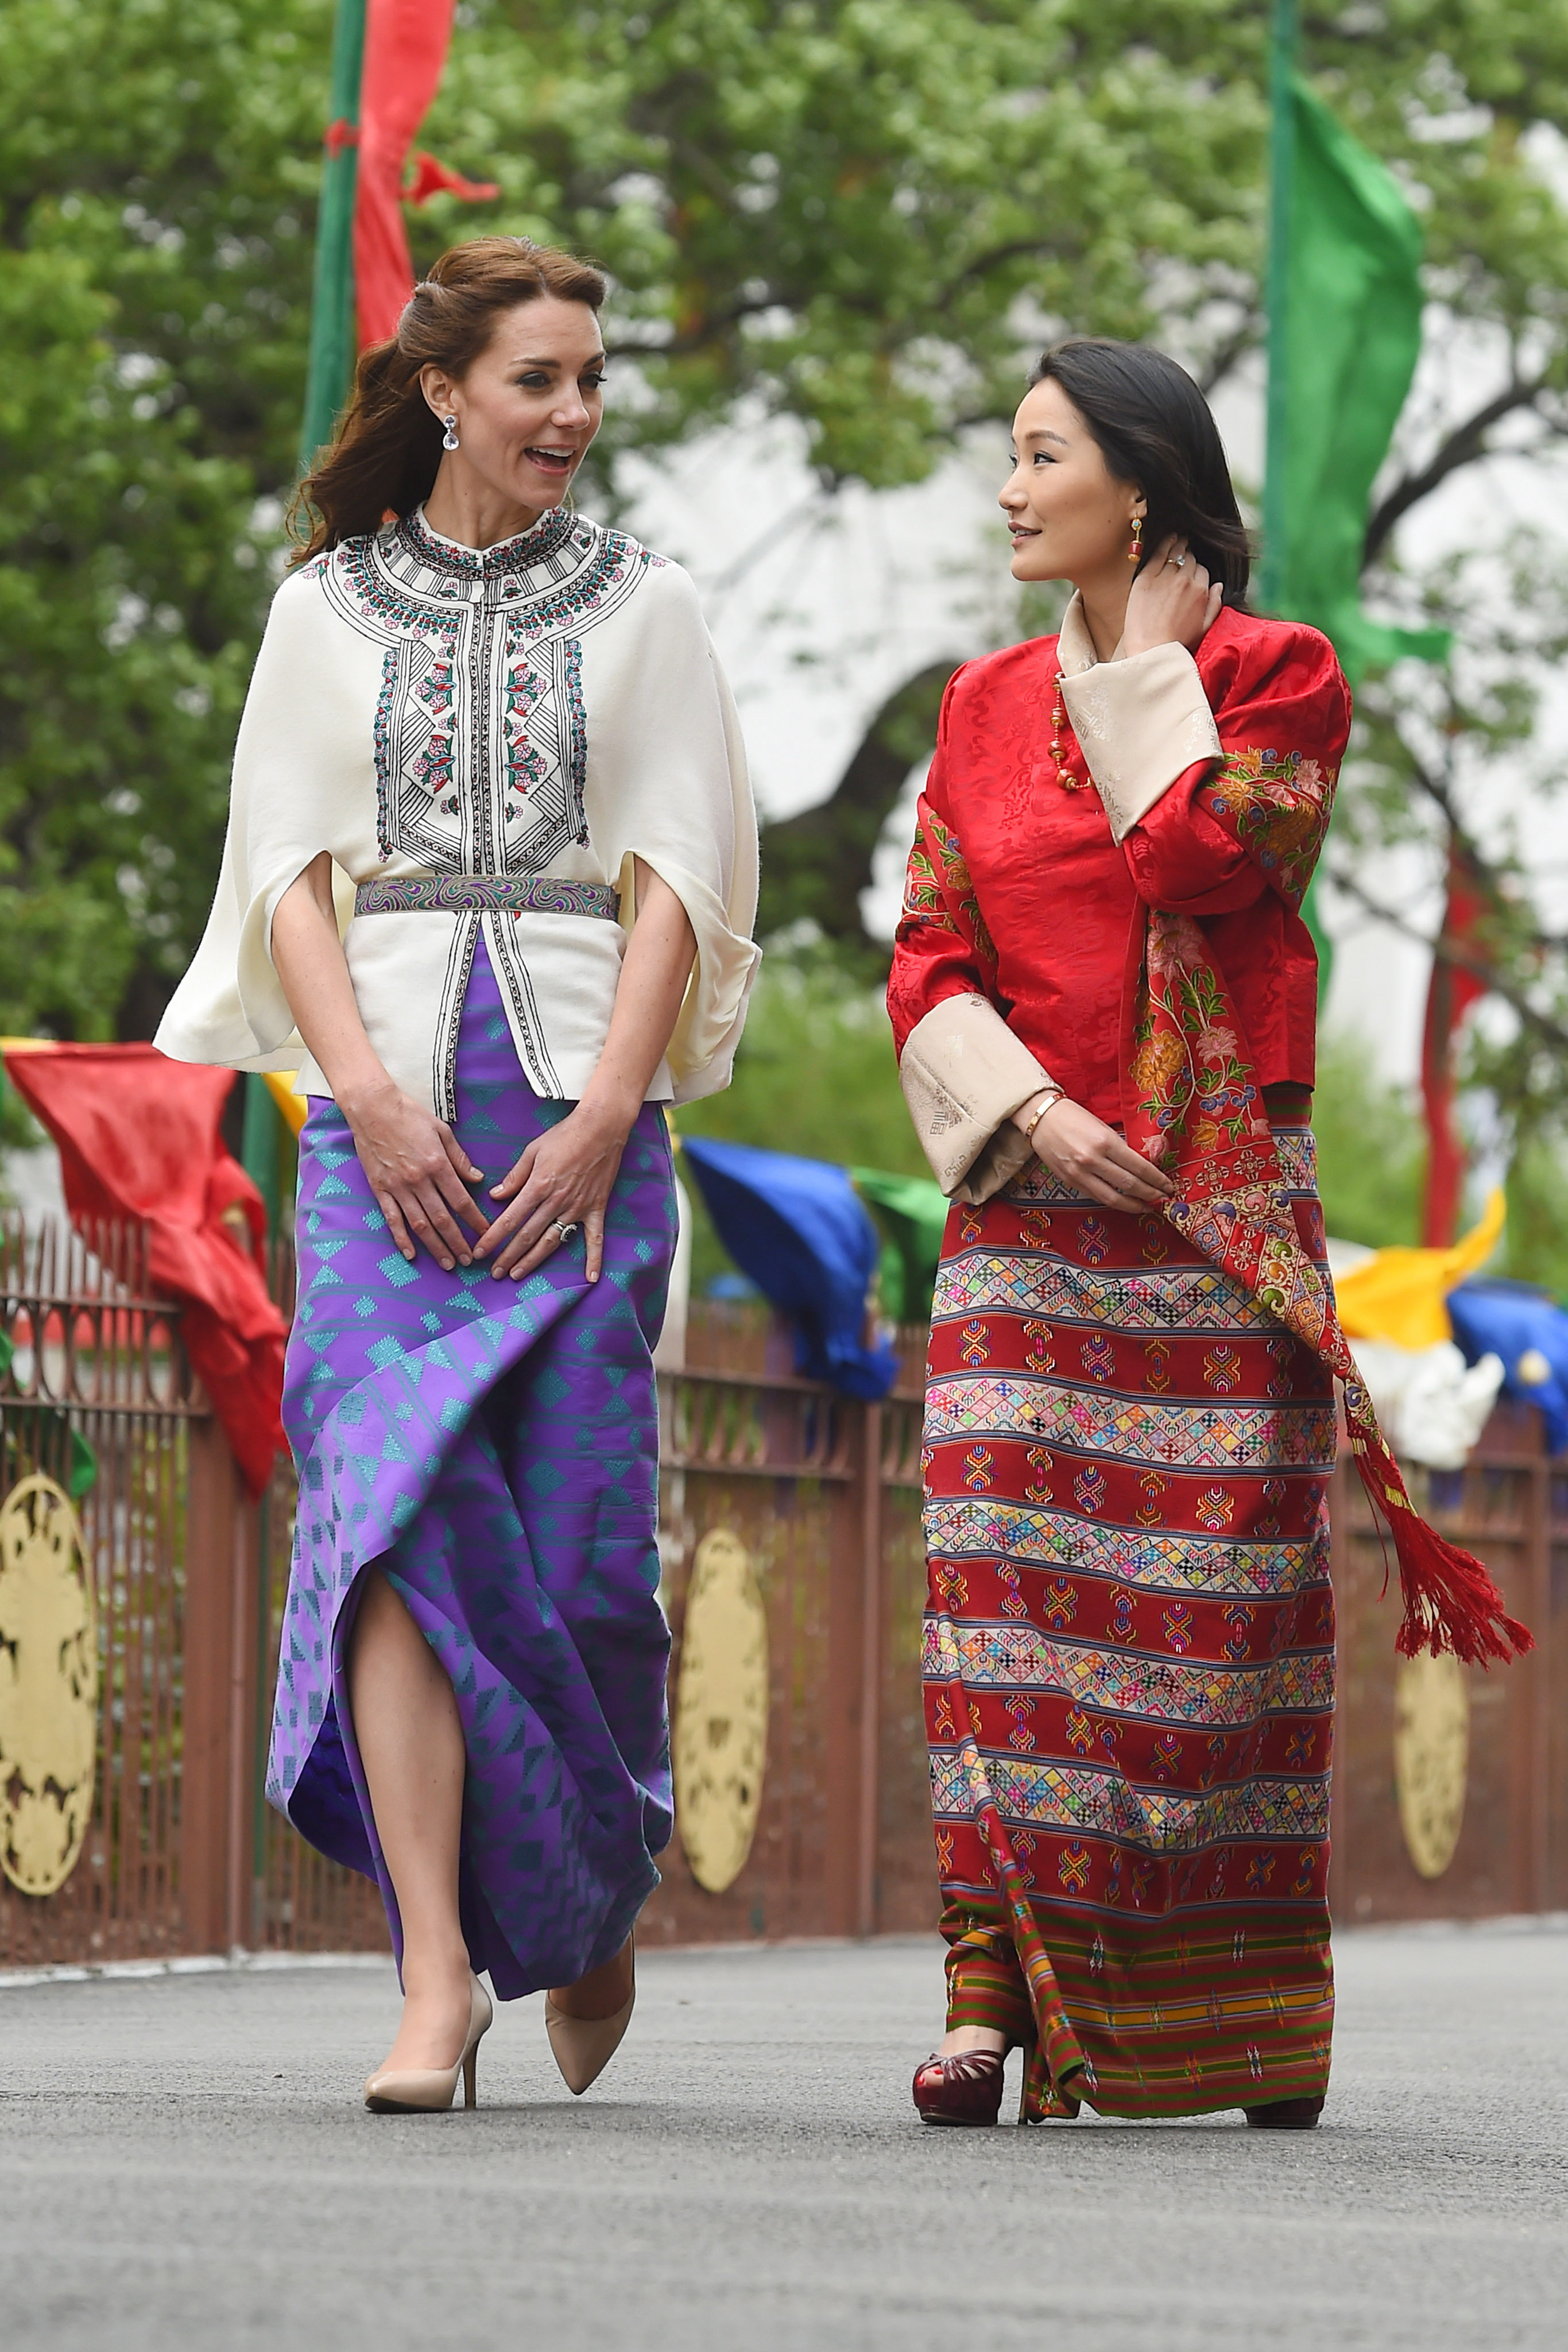 The Duchess of Cambridge and the Queen of Bhutan